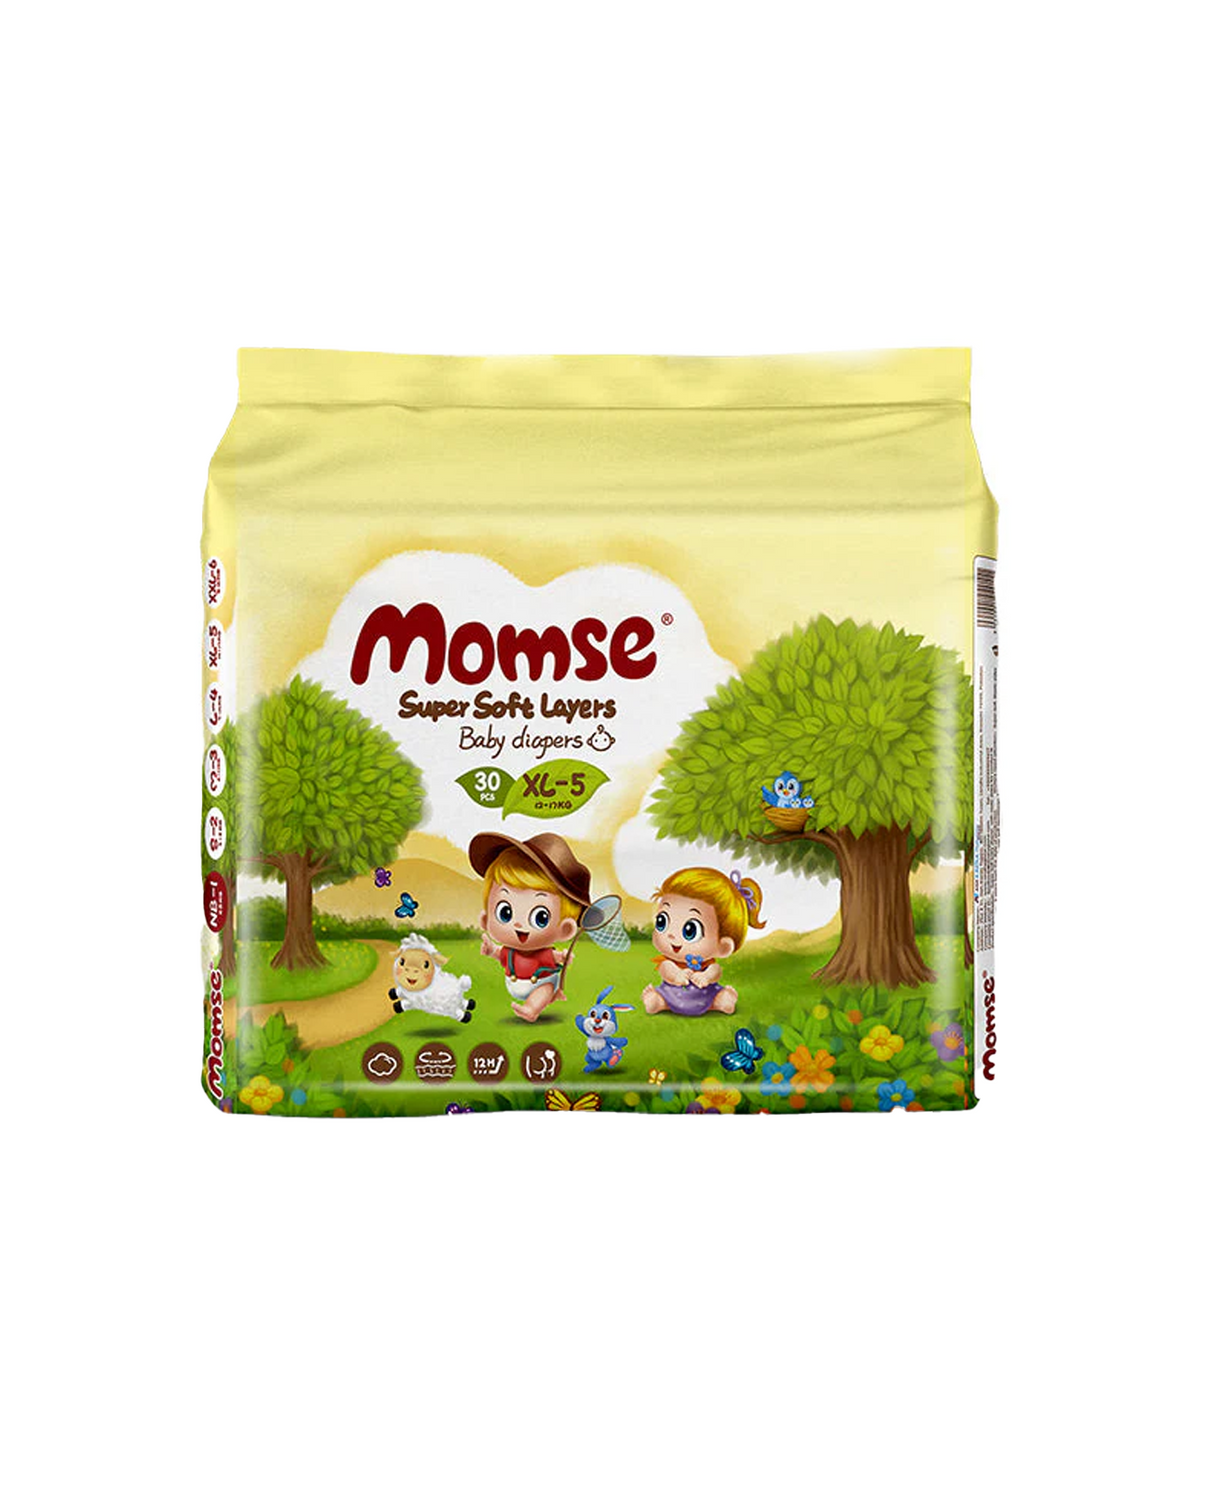 momse diapers economy pack xxl-6 24pc